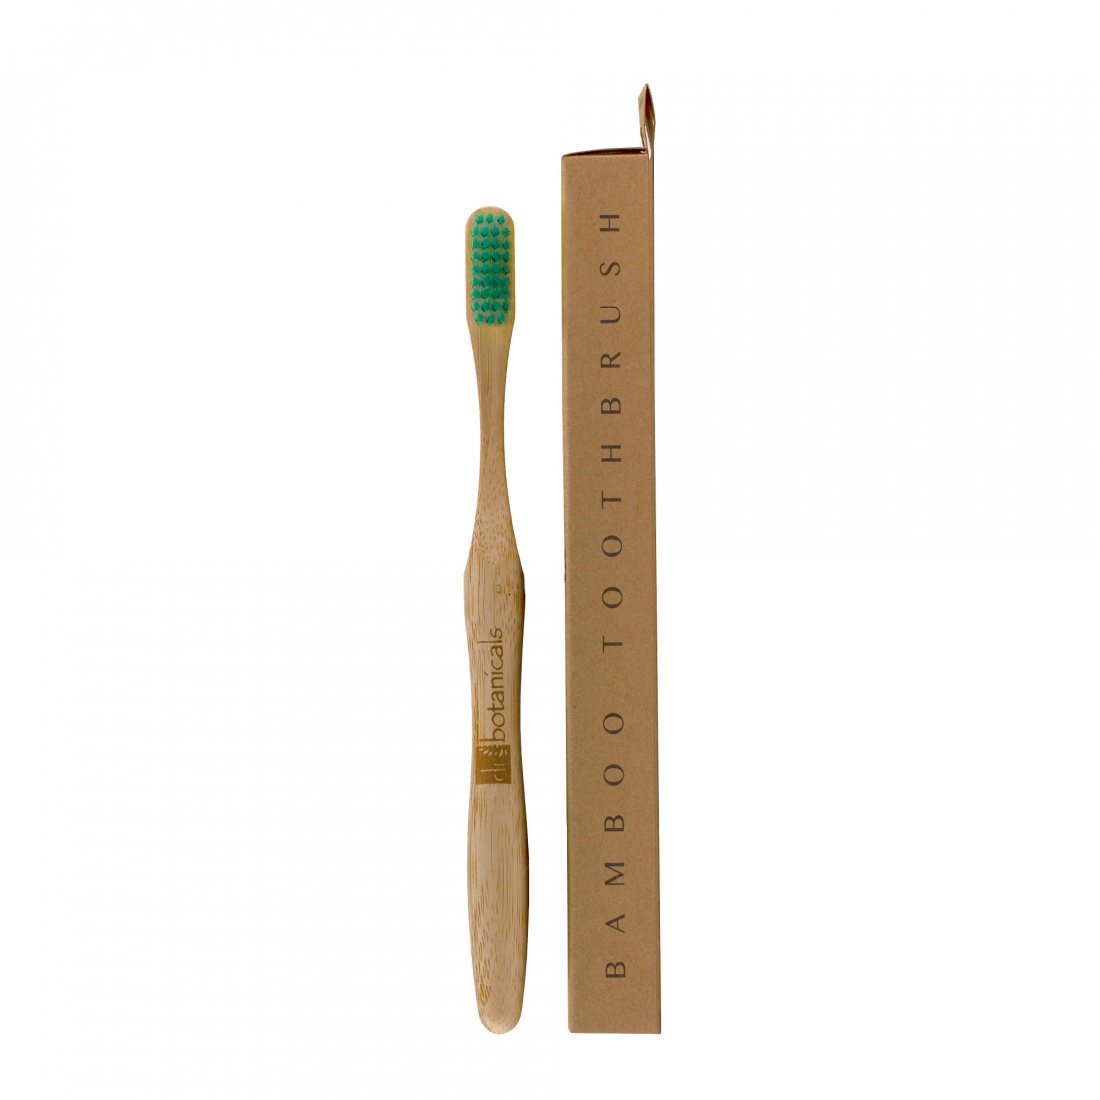 'Bamboo' Toothbrush - 1 piece